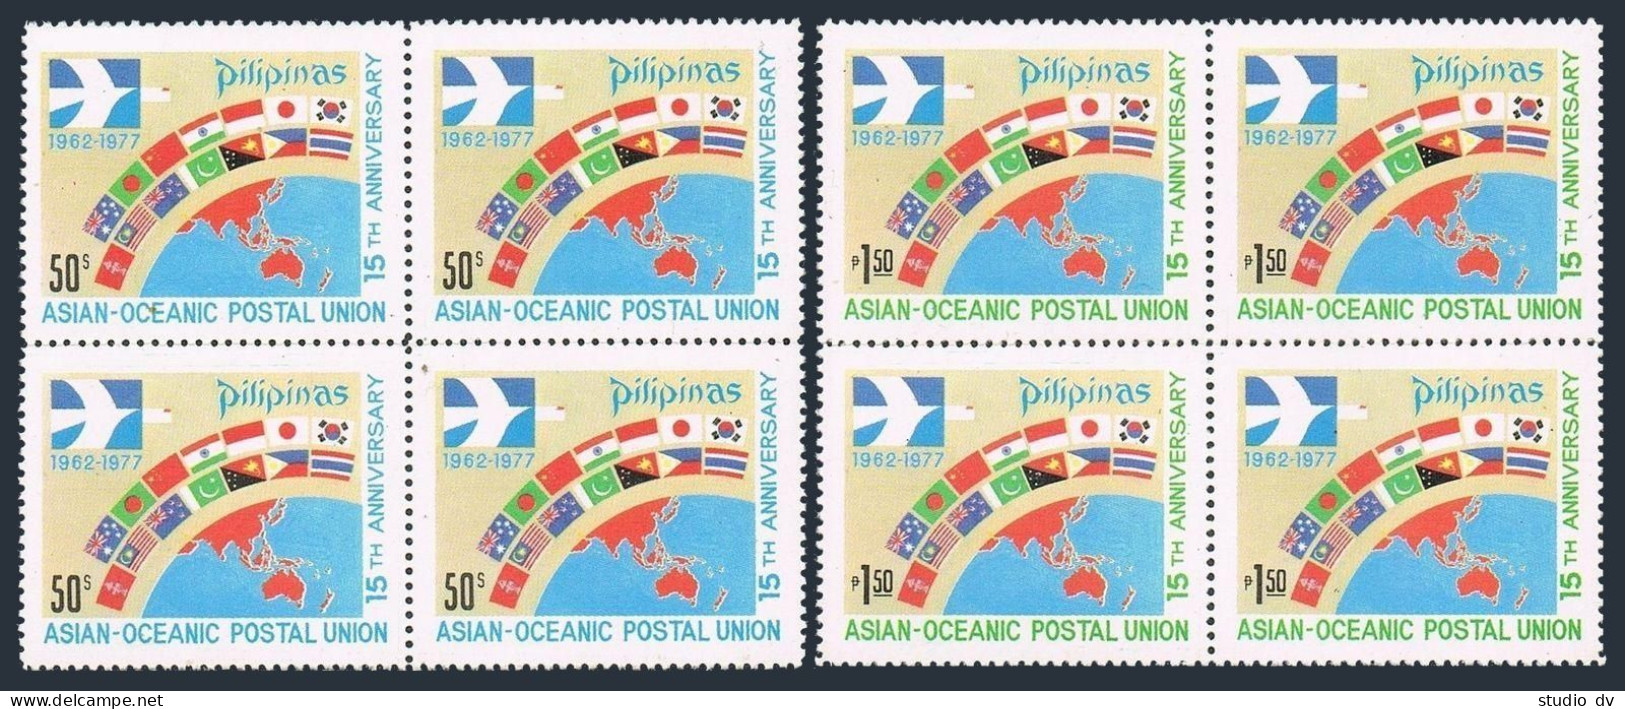 Philippines 1322-1323 Blocks/4,MNH. Asian-Oceanic Postal Union AOPU-1977. - Philippines